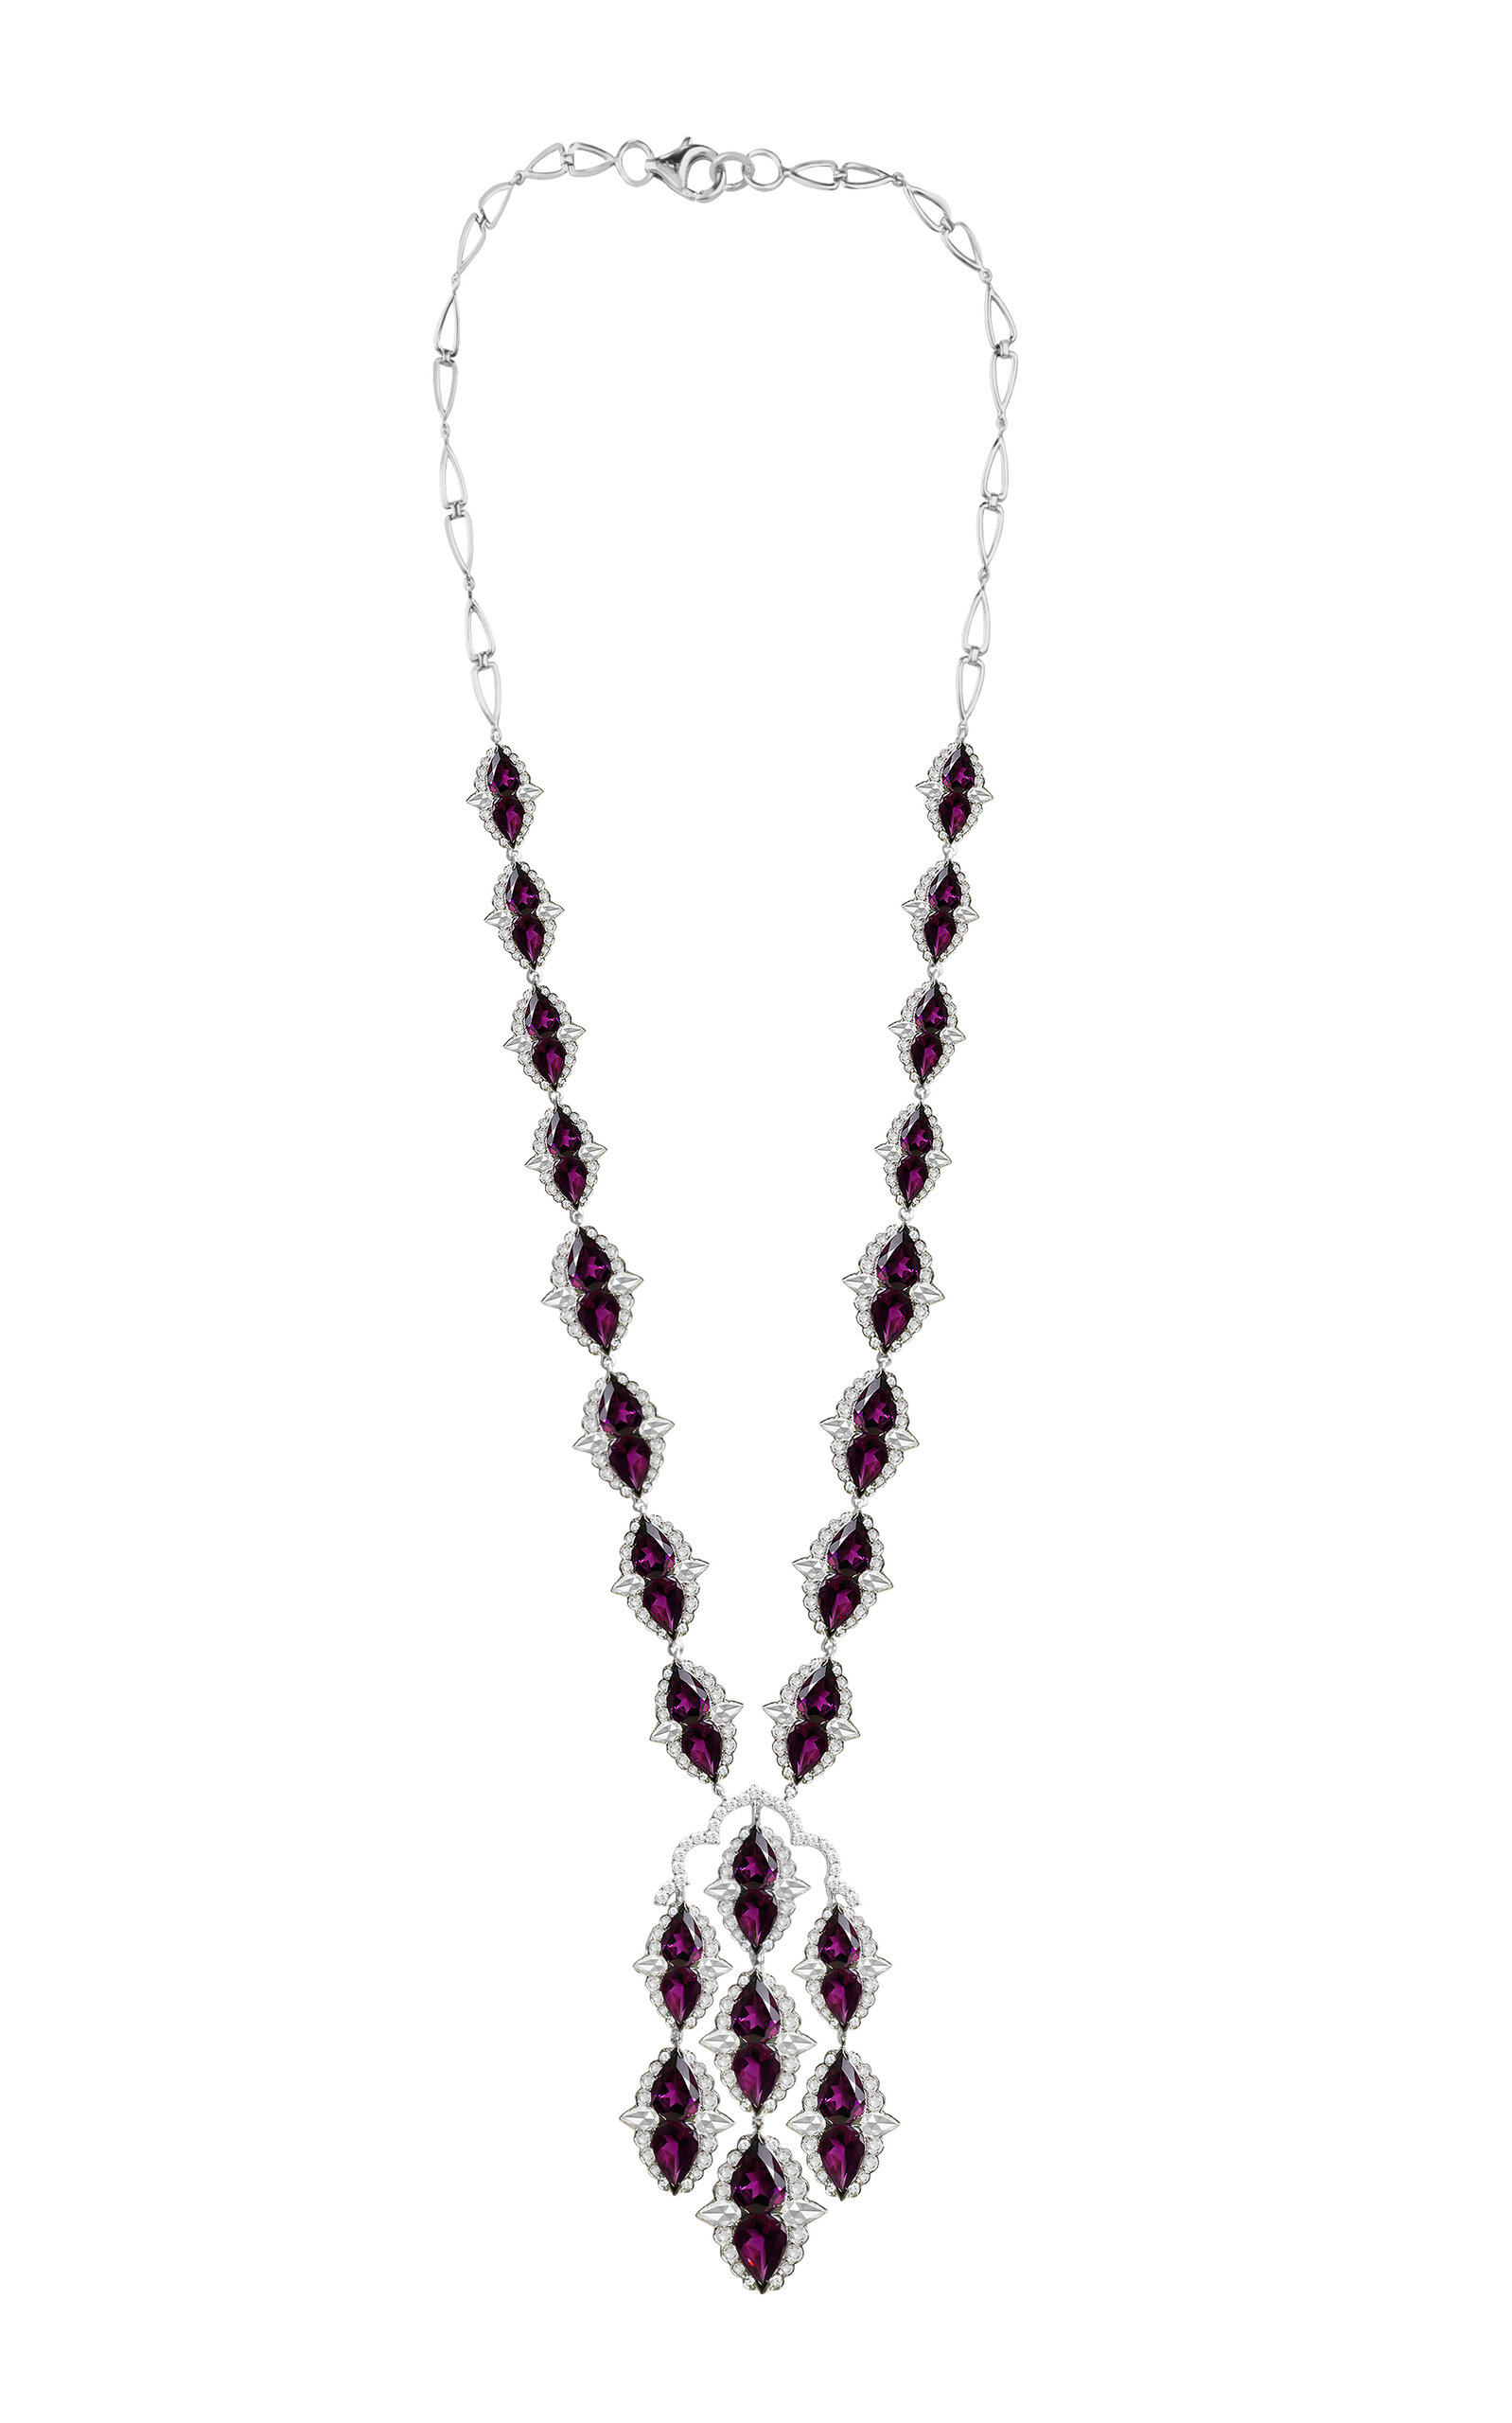 Vak 18k White Gold Architectural Splendor Diamond And Rhodolite Necklace In Purple